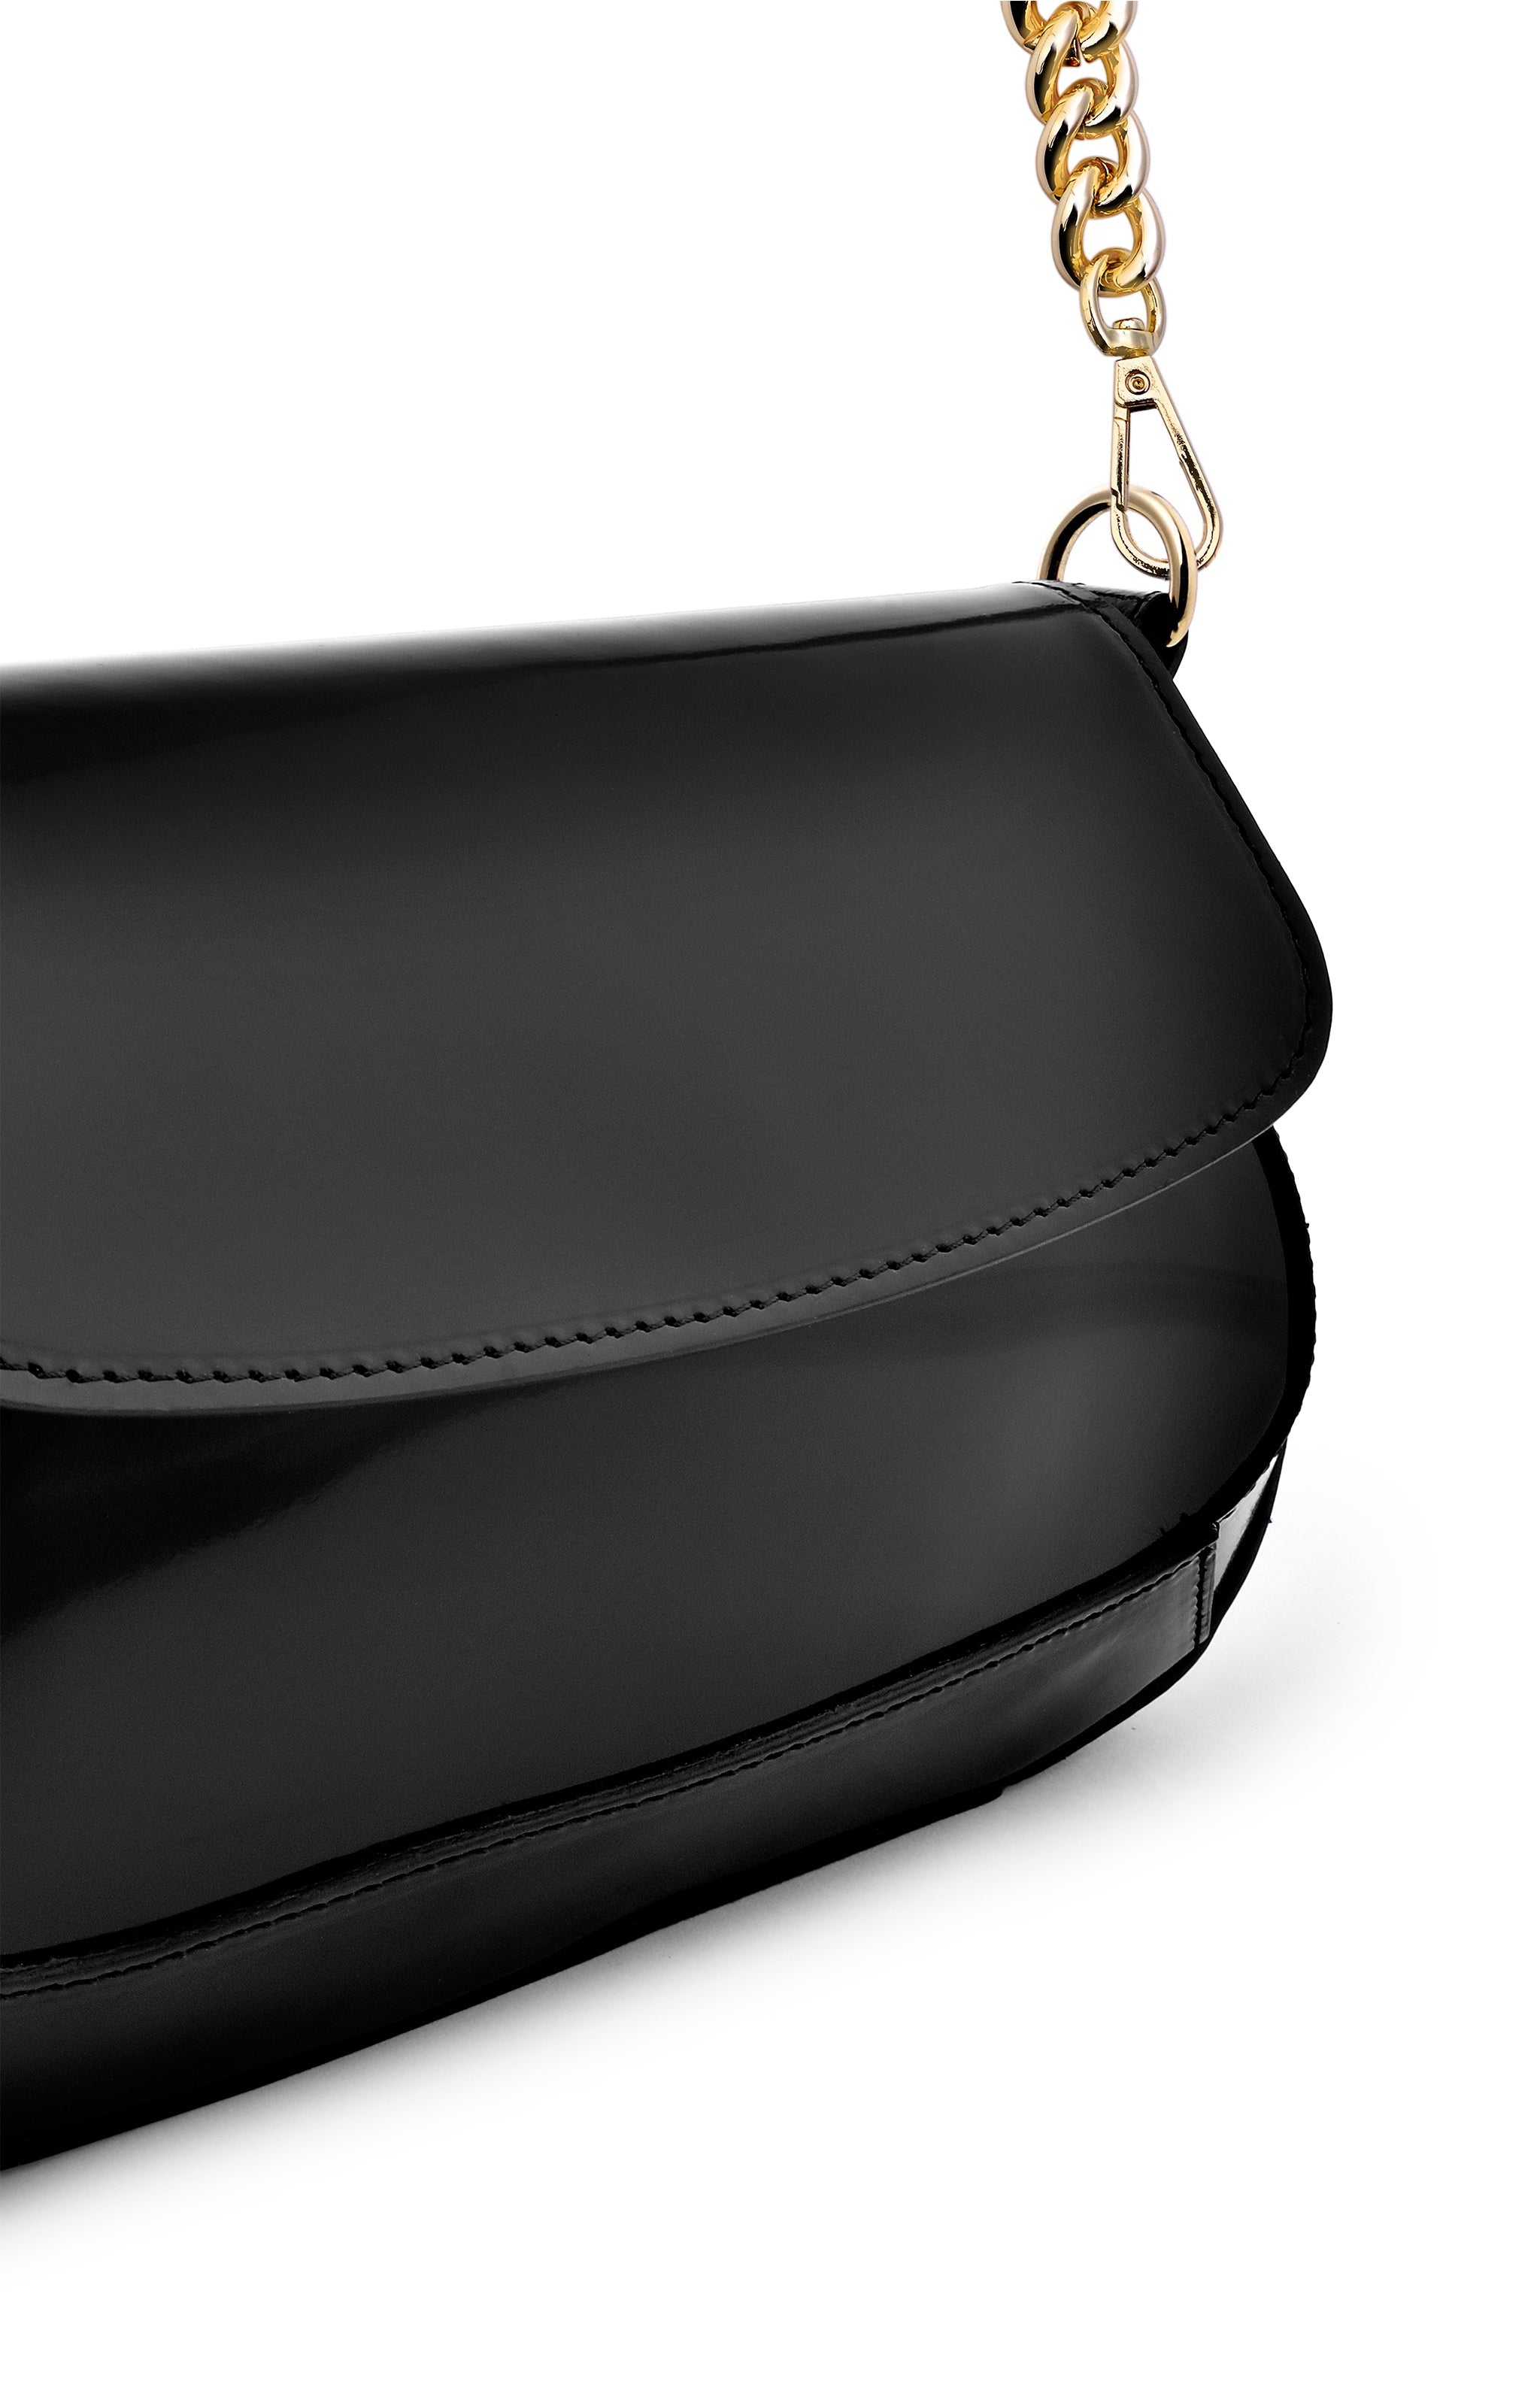 Ena Black Semi Patent Leather Shoulder Bag CL10534 NERO - 10